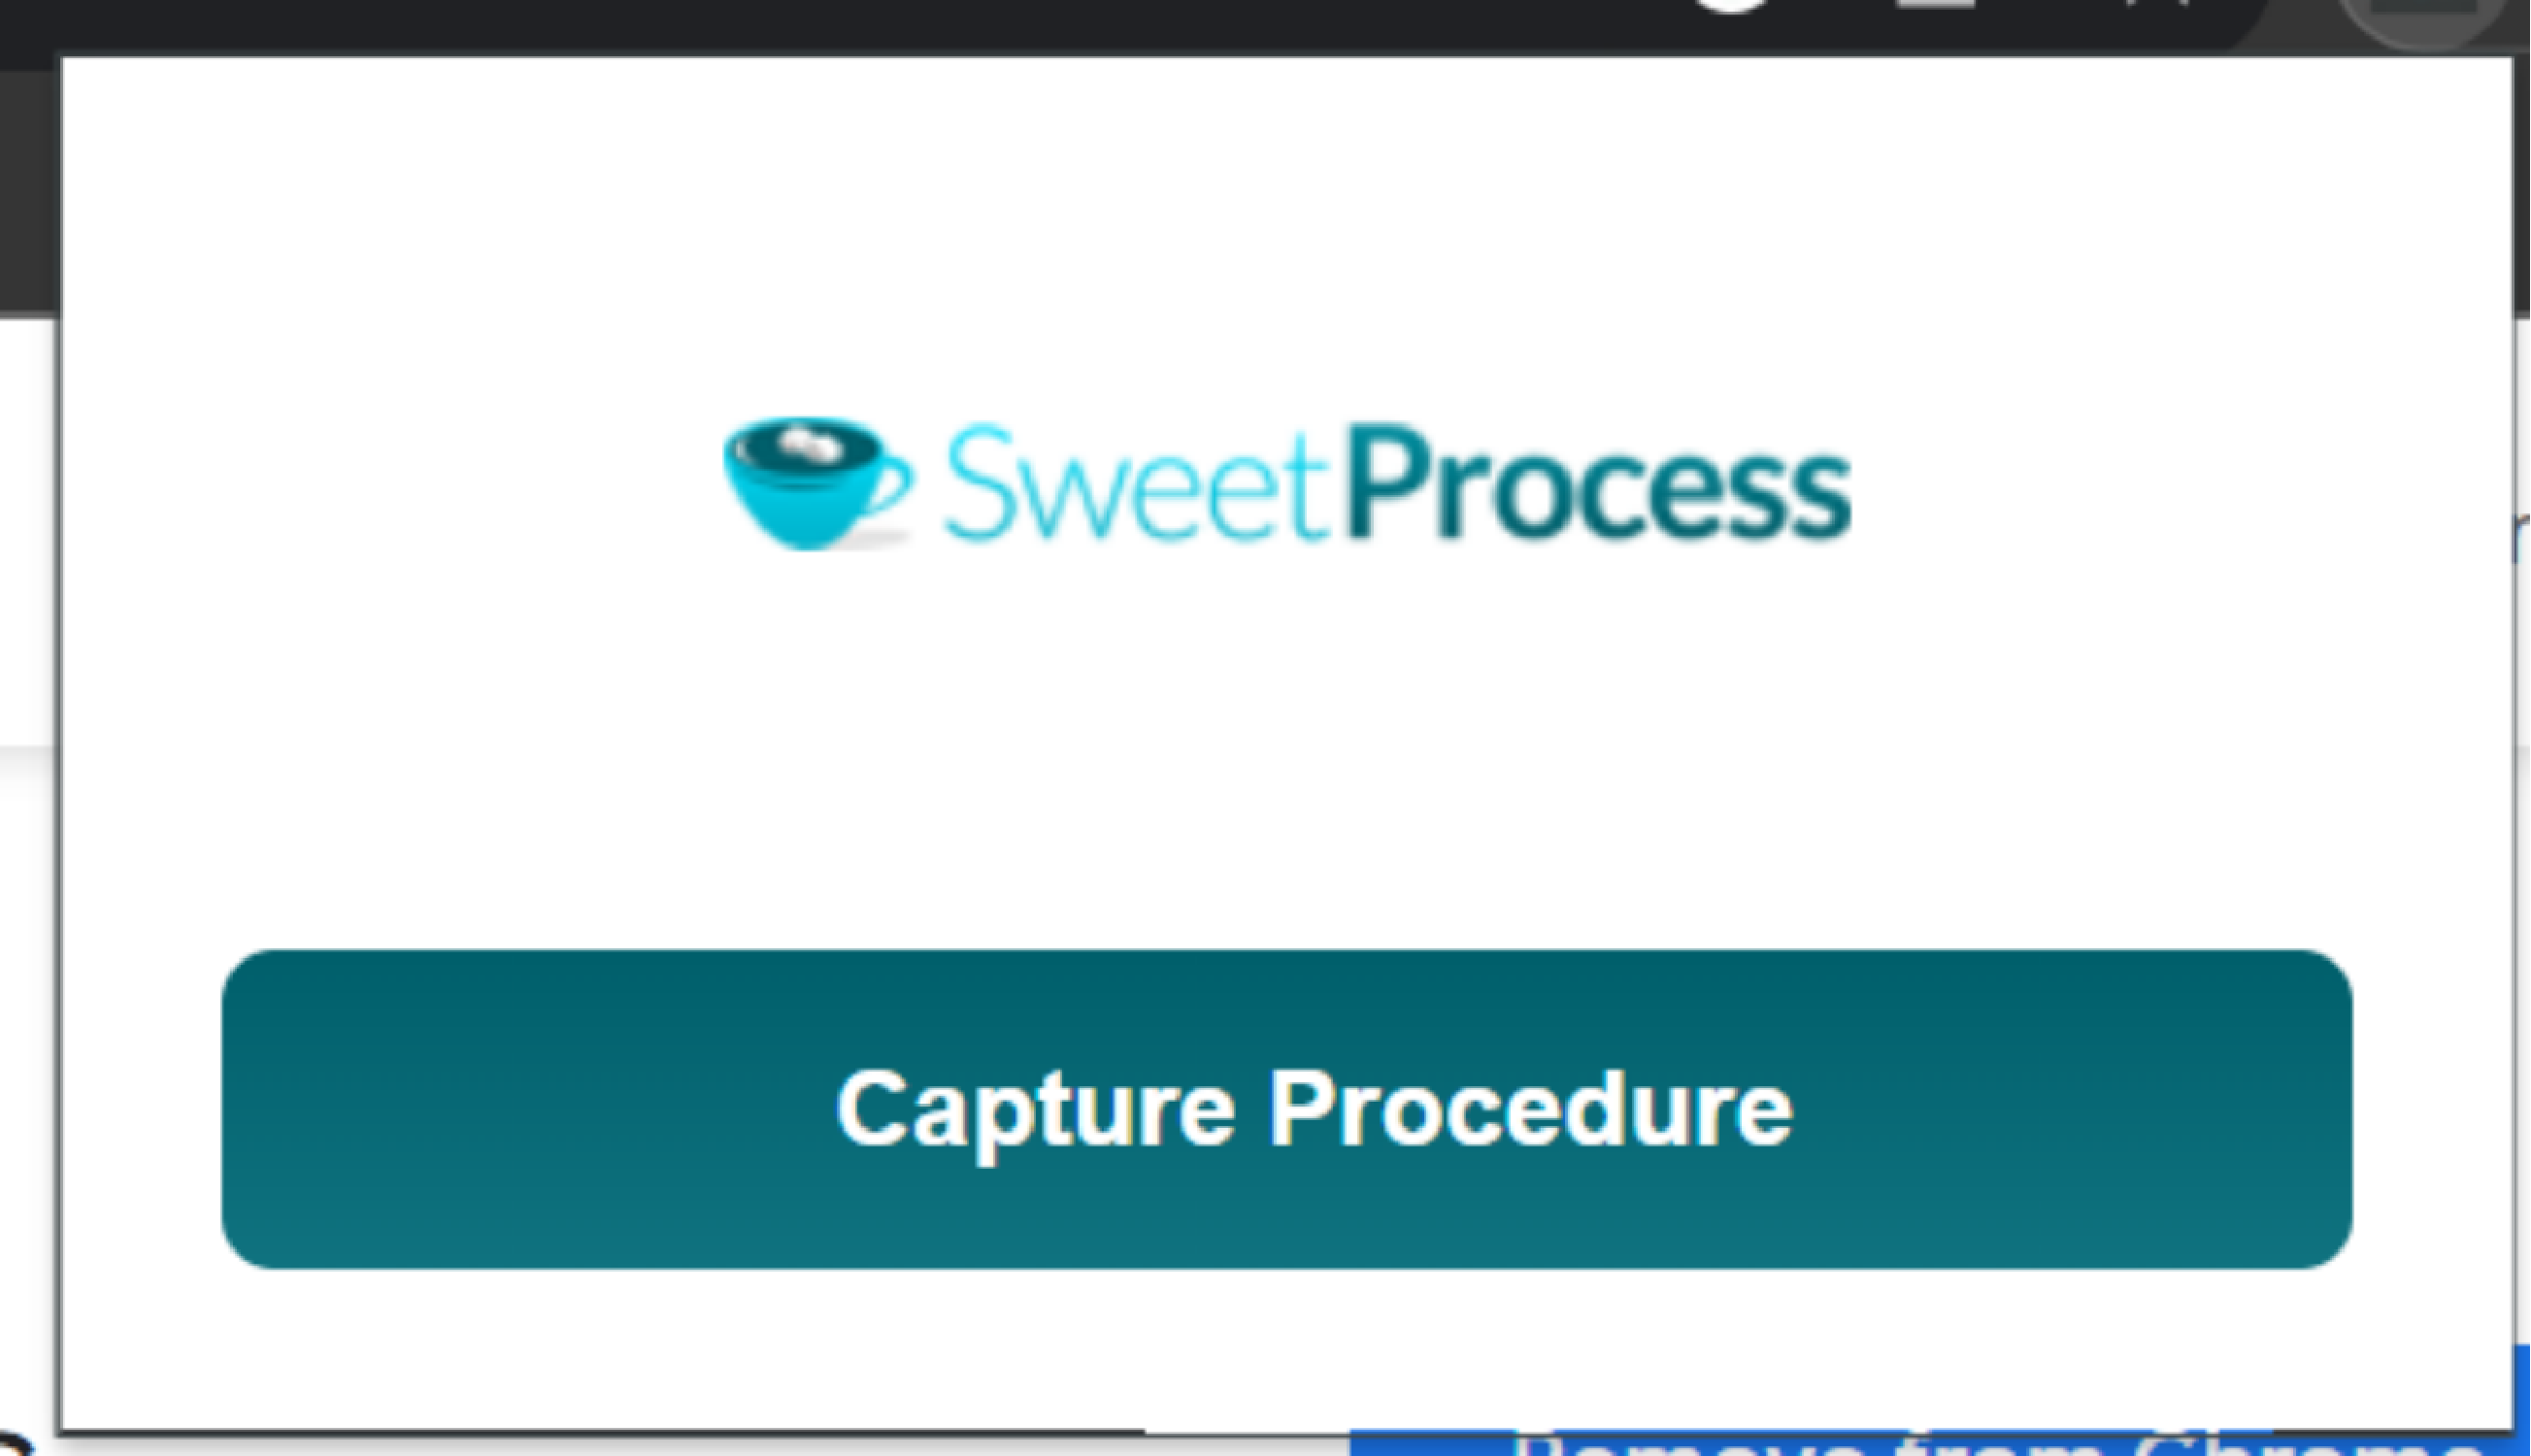 click on “Capture Procedure” to start.